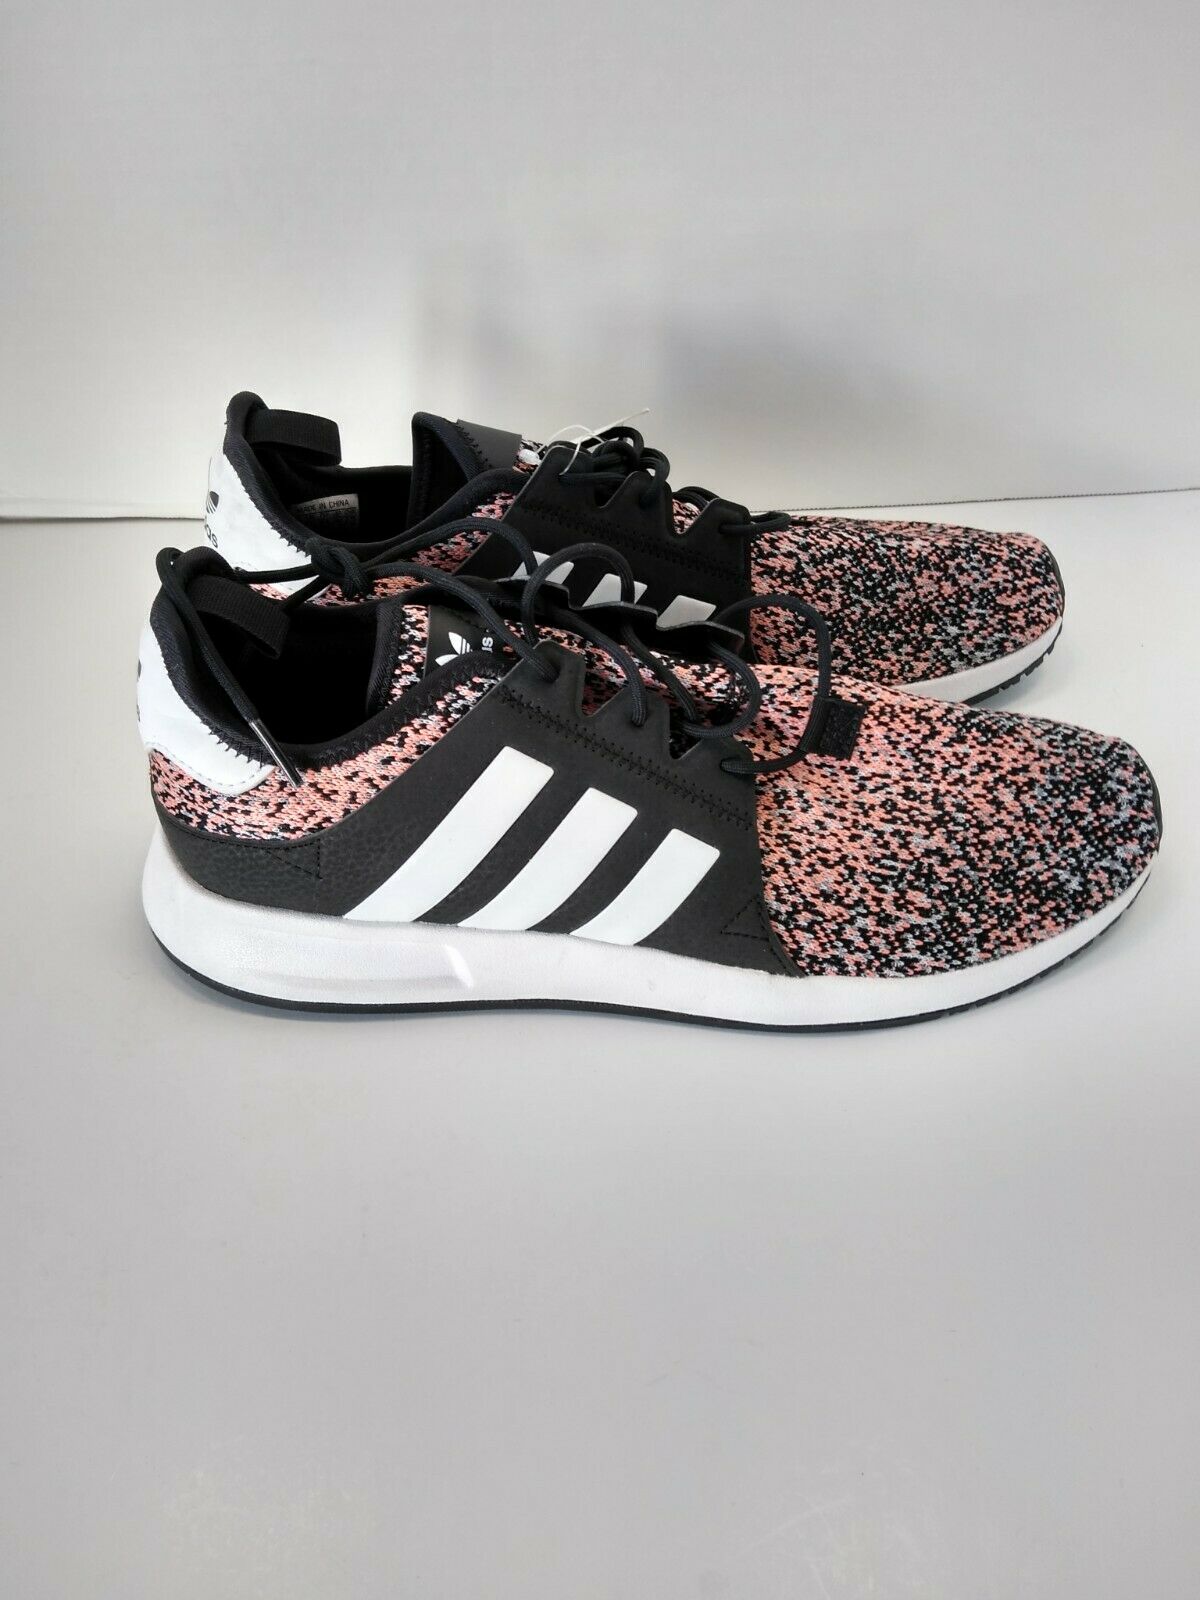 Adidas Originals XPLR Men's Lace Up Low Top Running Athletic Sneaker Shoes Sz 10